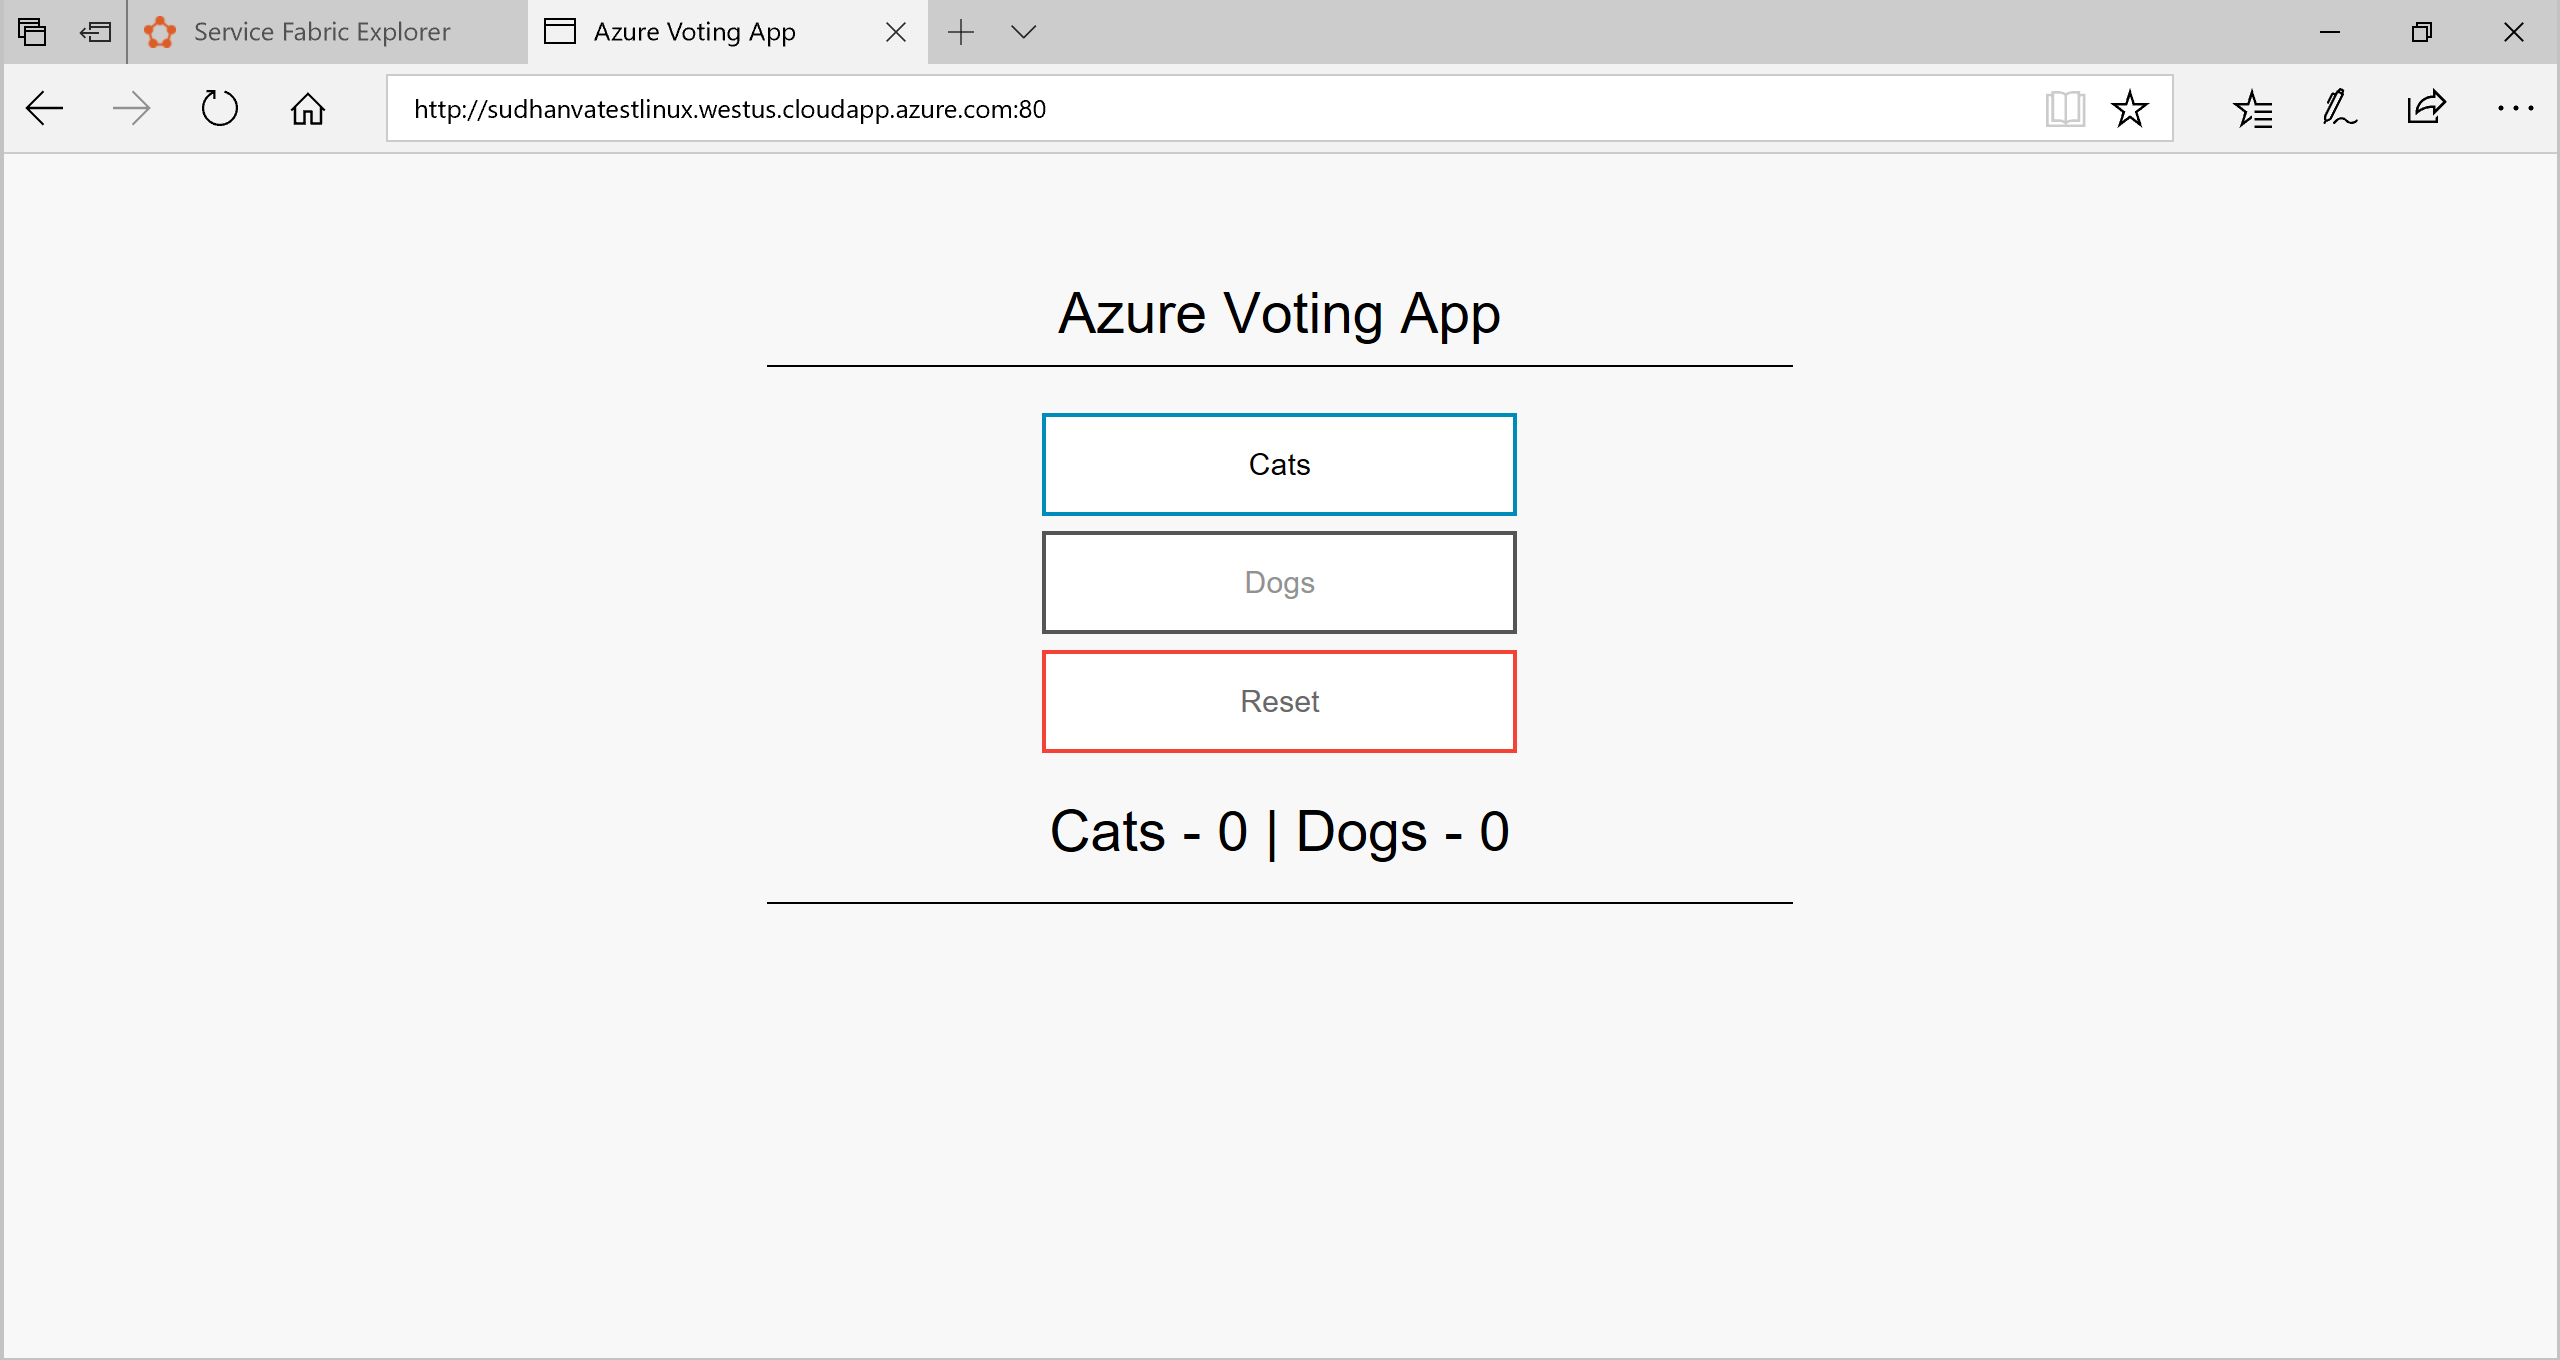 [Cats]、[Dogs]、[Reset] のボタンと合計値を含んだ Azure Voting アプリを示すスクリーンショット。